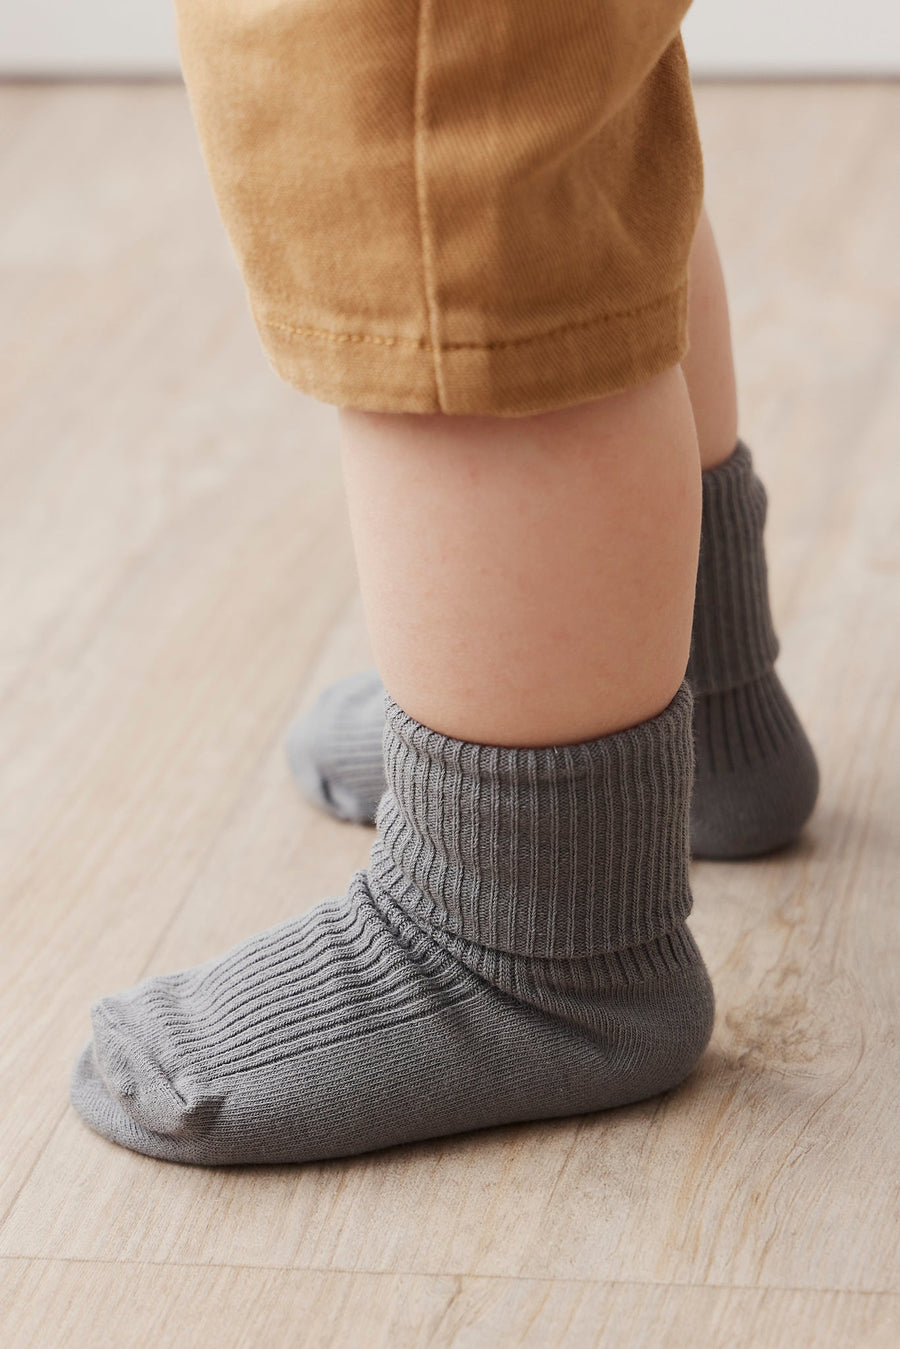 Classic Rib Sock - Dawn Childrens Sock from Jamie Kay USA